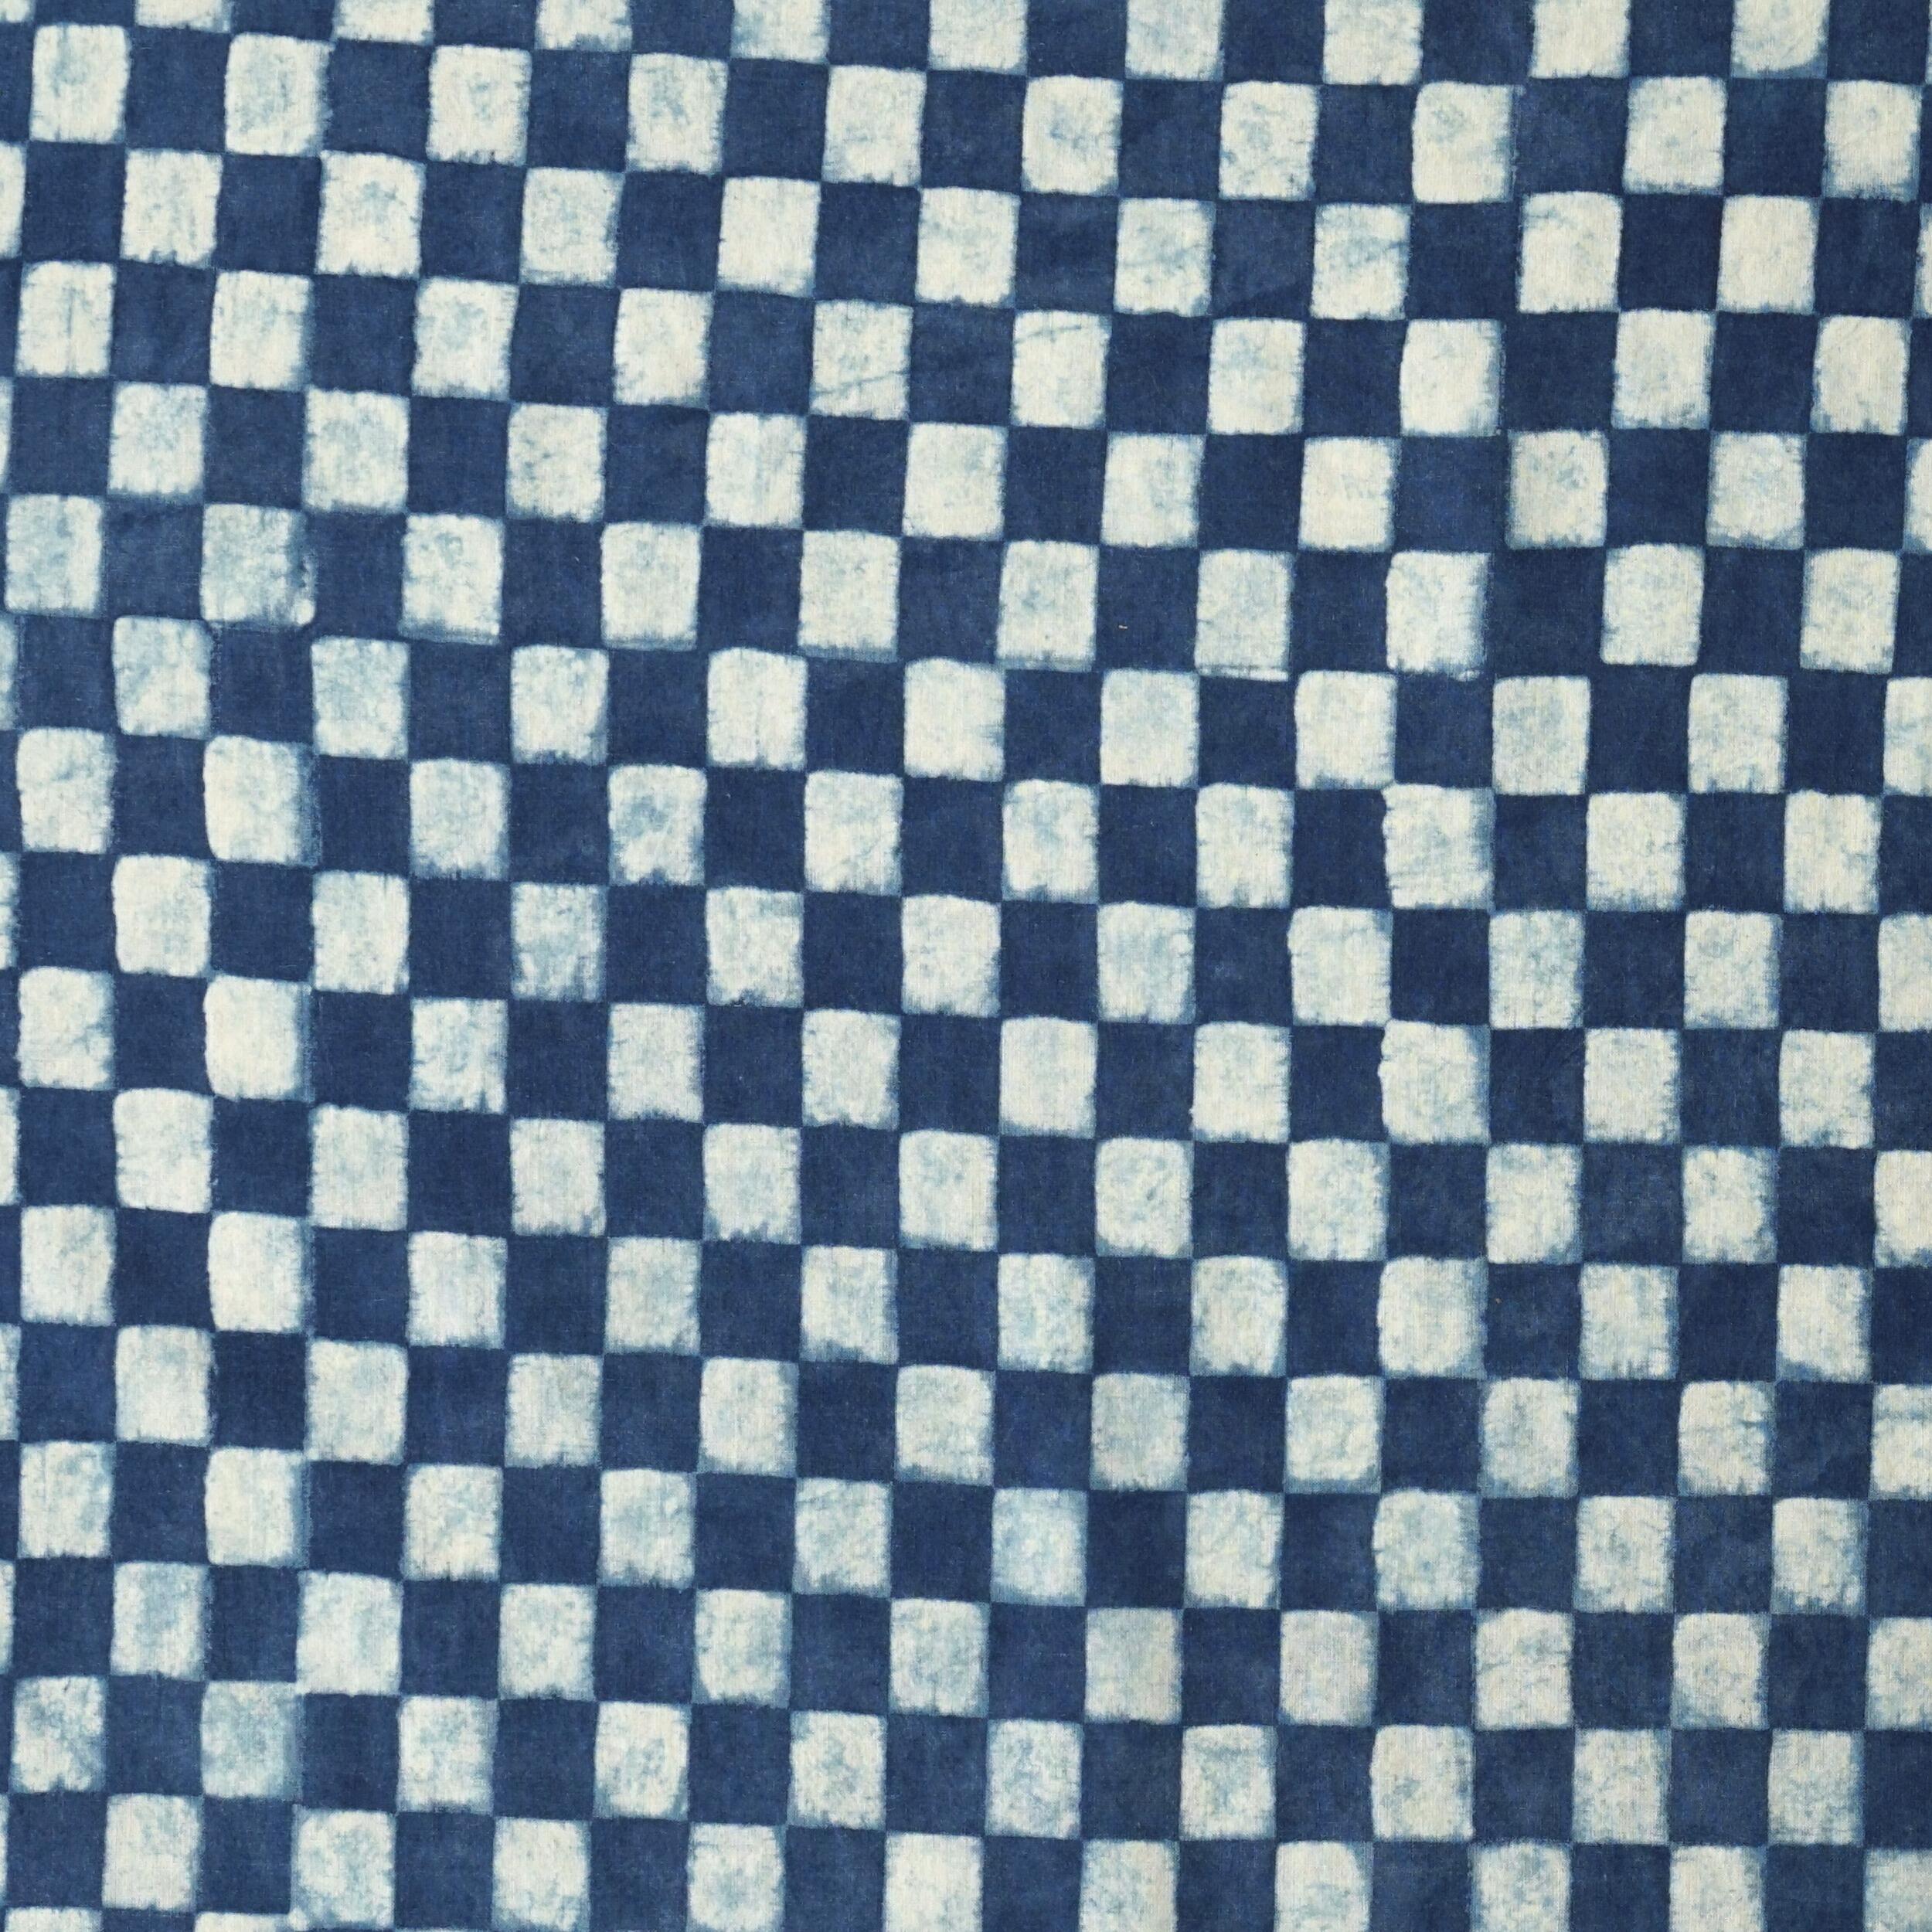 Block-Printed Cotton - Checkers Print - Indigo Dyed - Flat